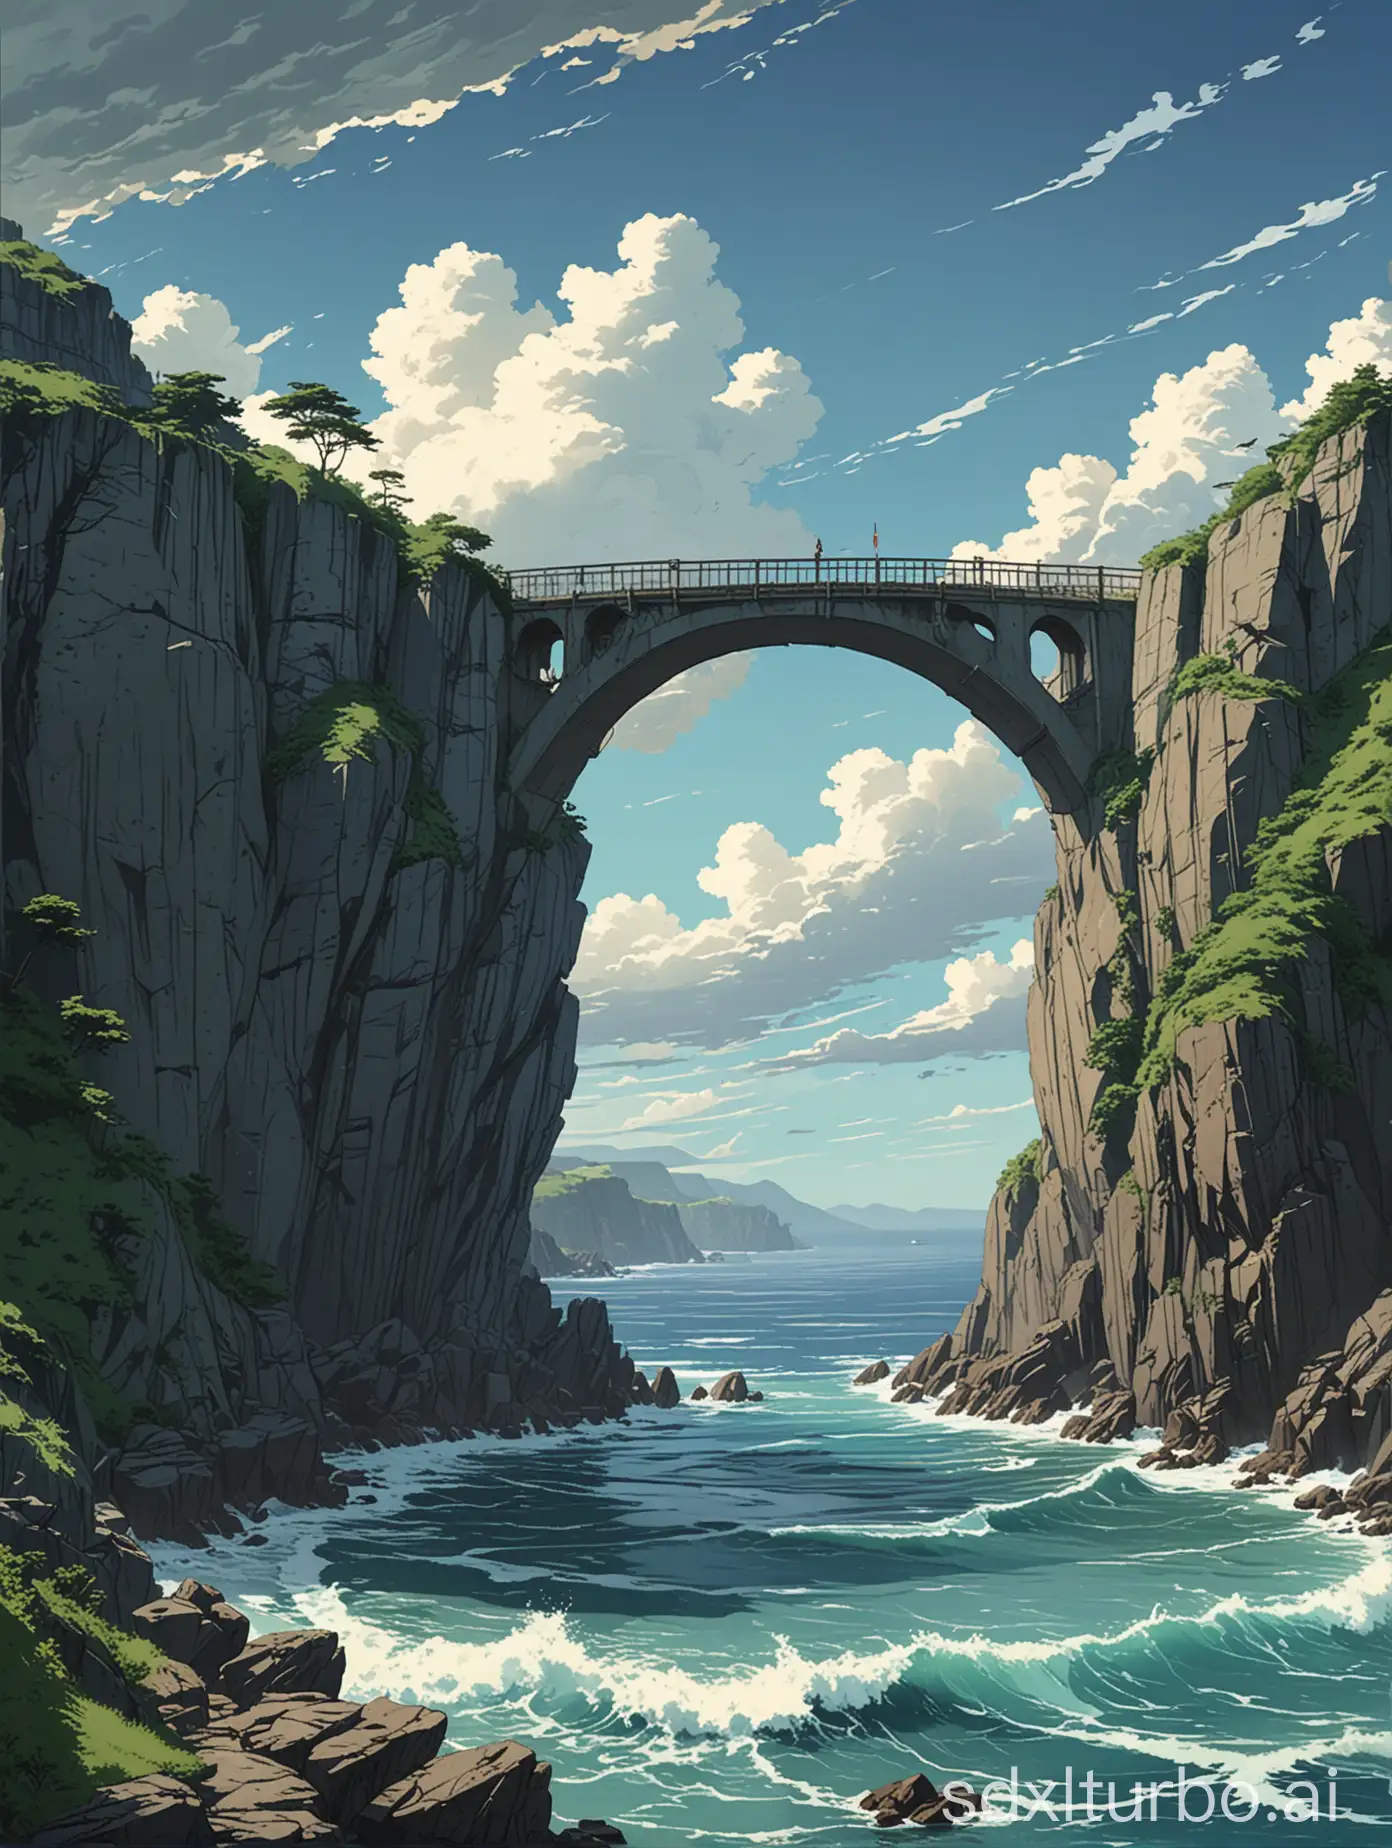 Studio-Ghibli-Style-Coastal-Landscape-with-Arch-Bridge-and-Rugged-Cliffs